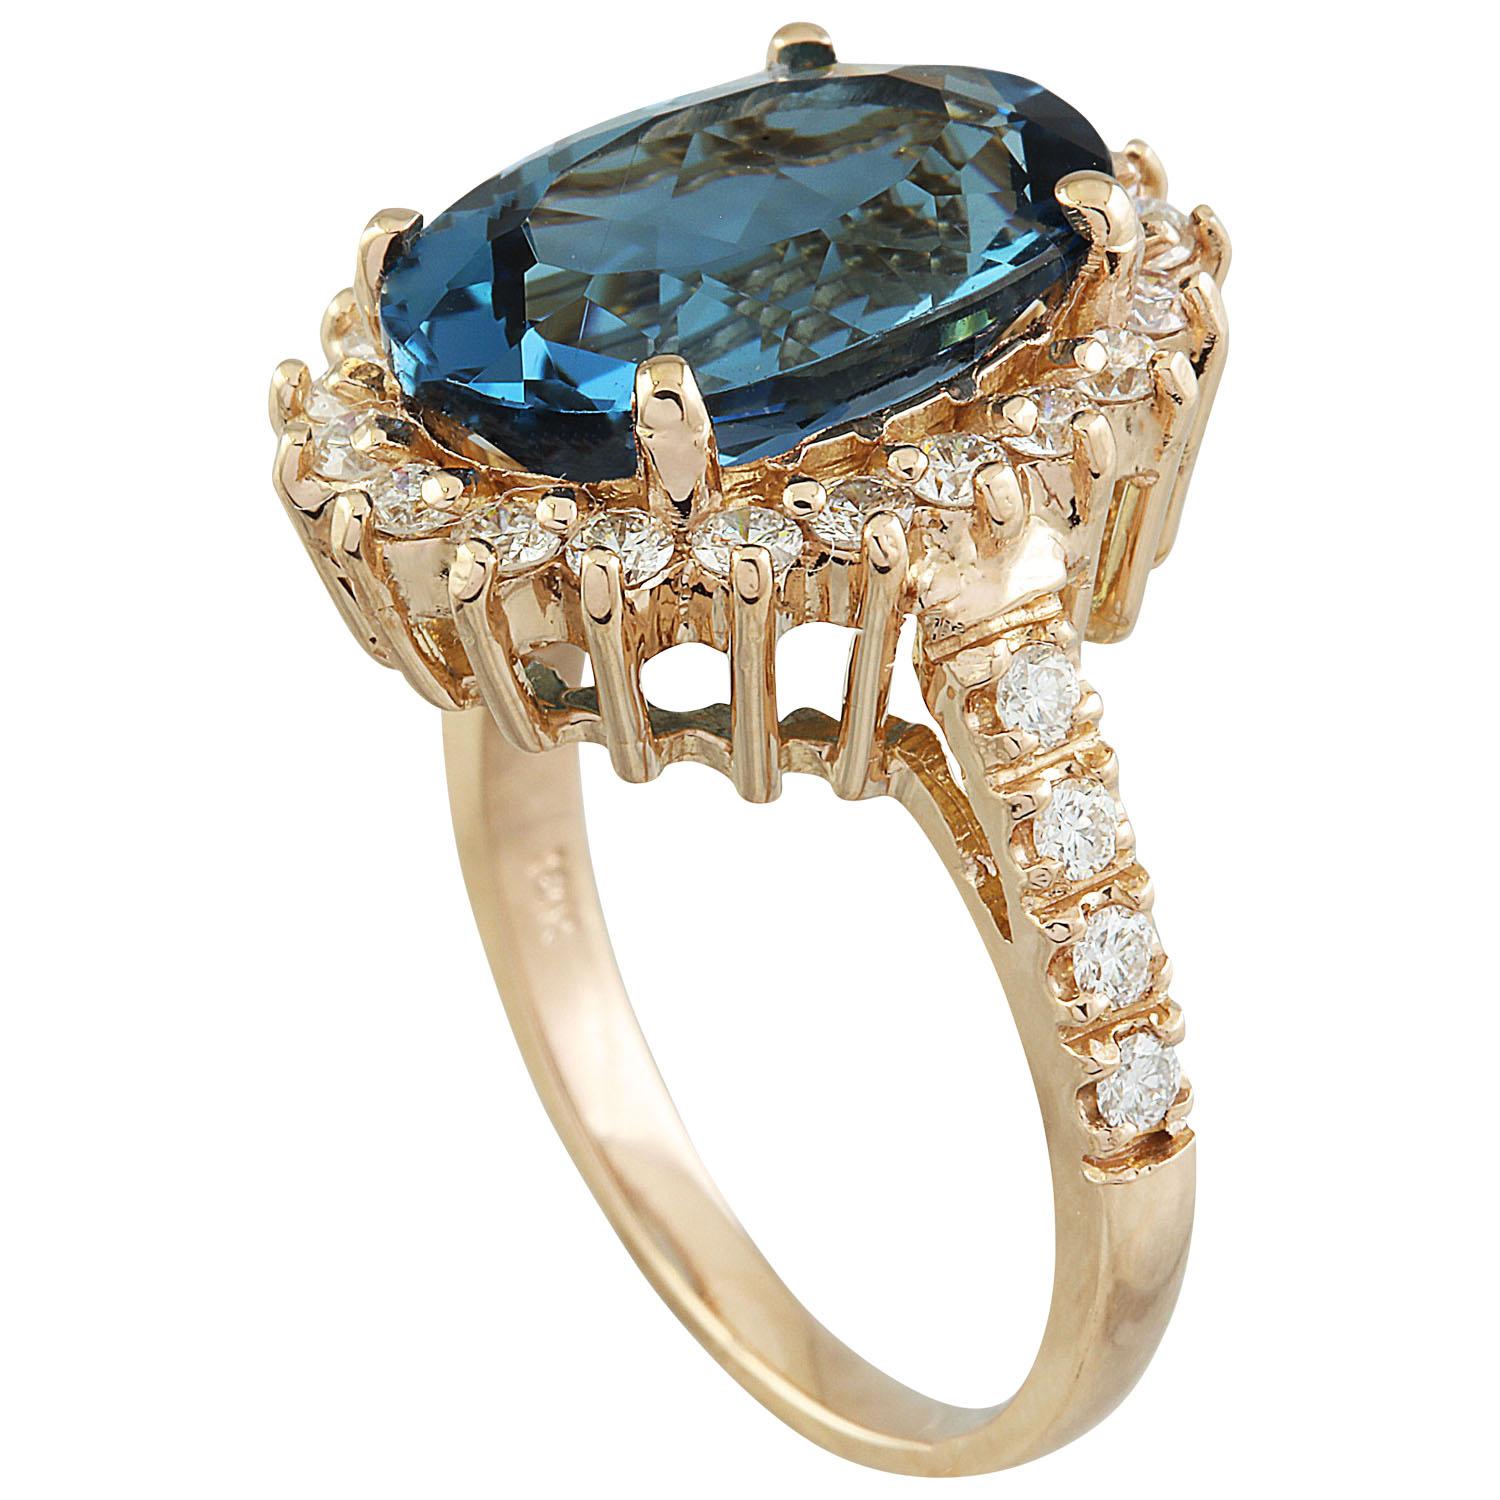 8.35 Carat Natural Topaz 14 Karat Solid Rose Gold Diamond Ring
Stamped: 14K 
Total Ring Weight: 6 Grams 
Topaz Weight 7.35 Carat (14.00x10.00 Millimeters)
Diamond Weight: 1.00 Carat (F-G Color, VS2-SI1 Clarity)
Face Measures: 19.05x14.40 Millimeter